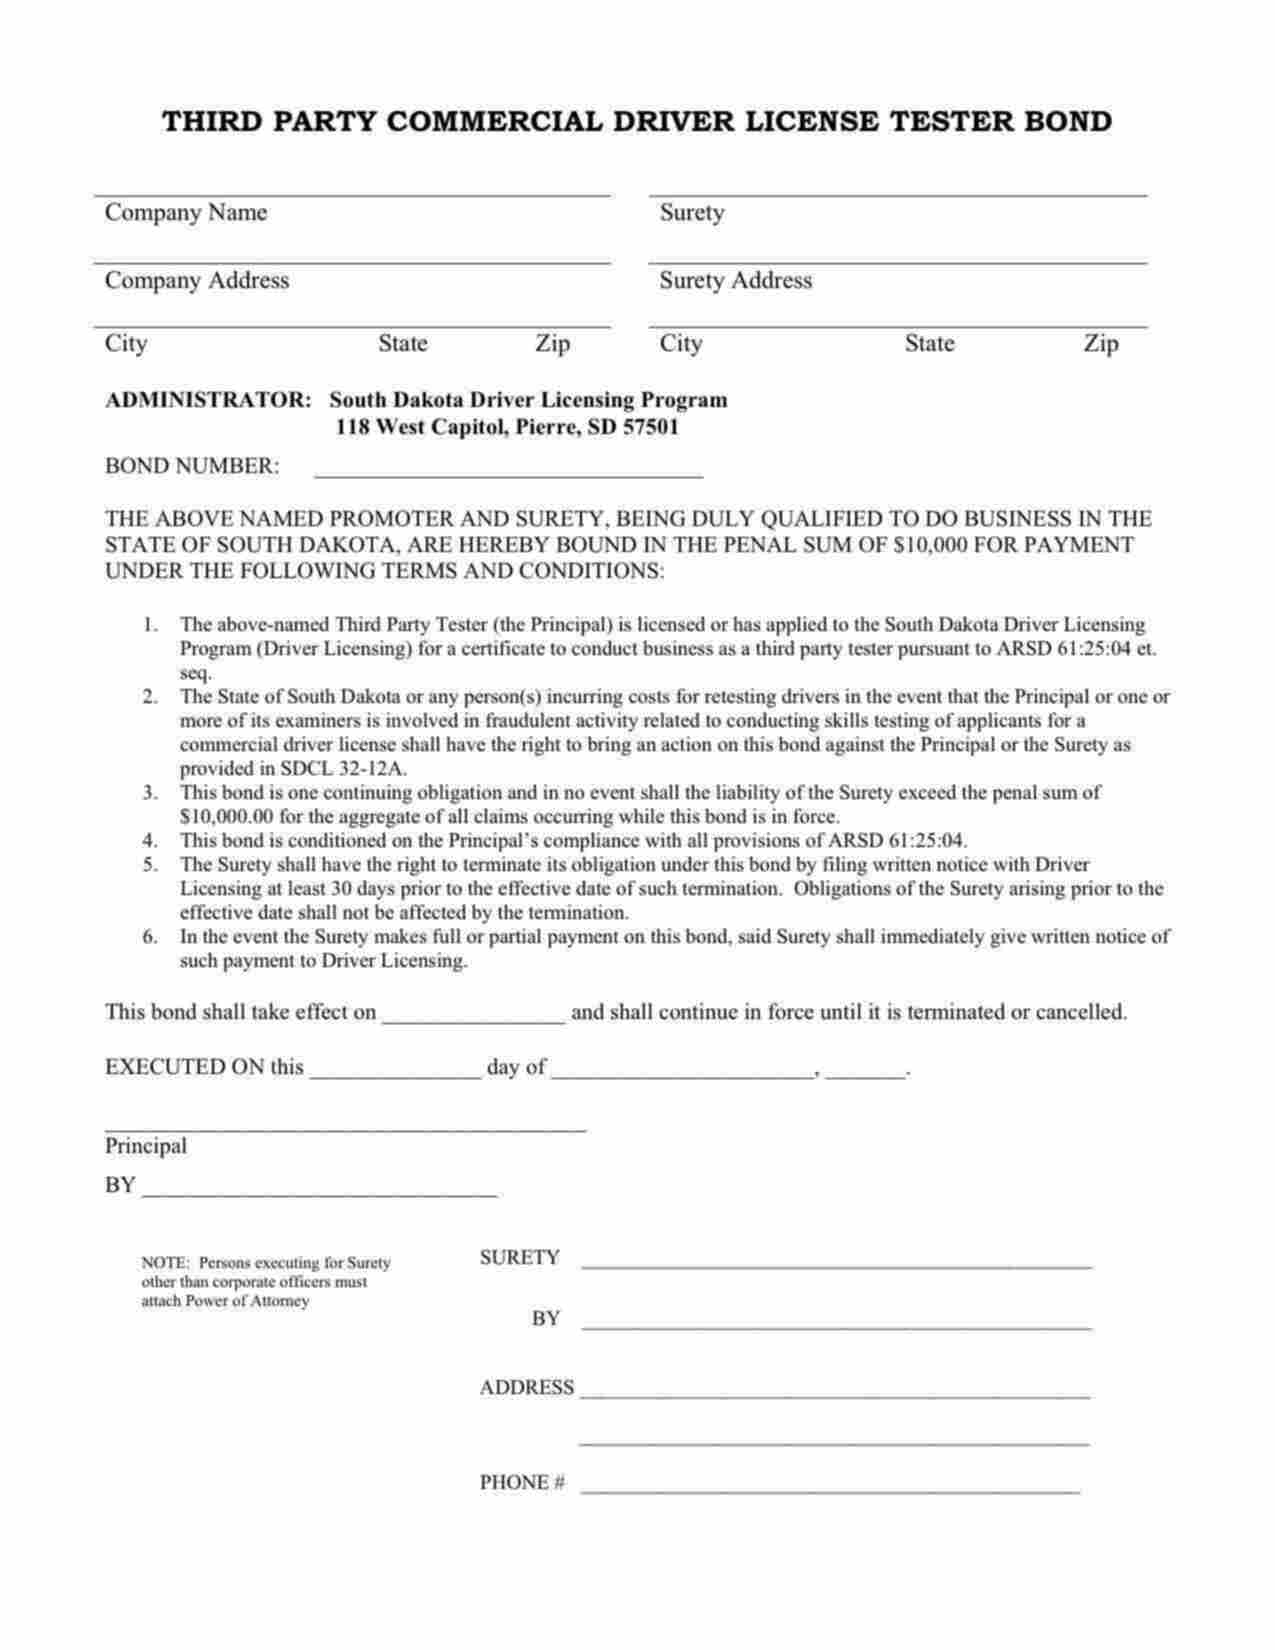 South Dakota Third Party Commercial Driver License (CDL) Tester Bond Form